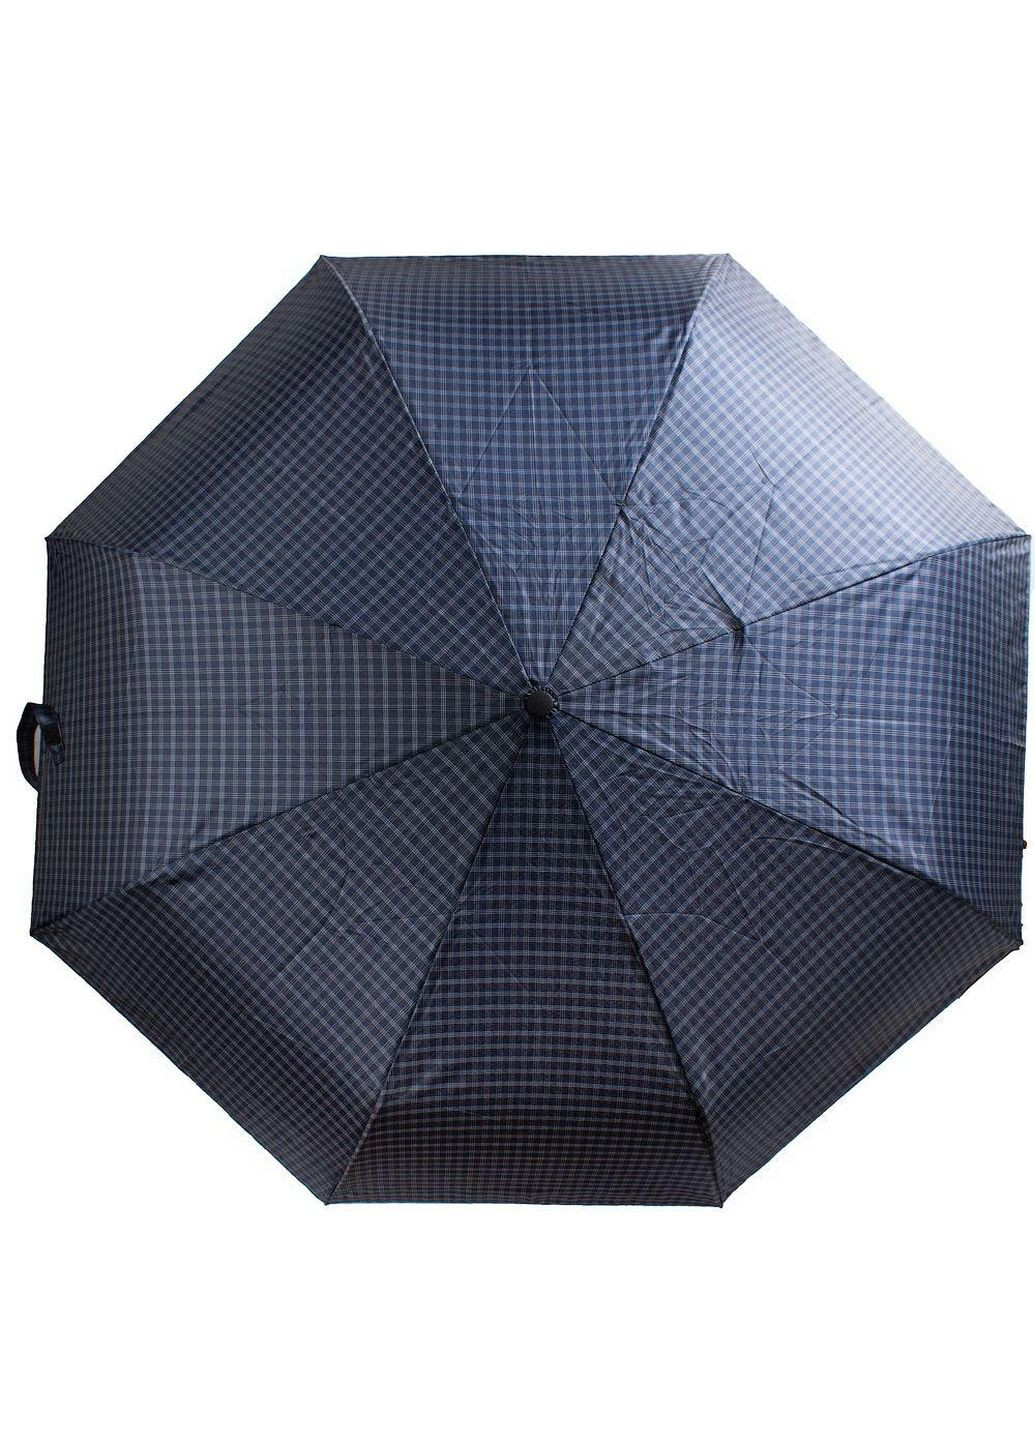 Мужской складной зонт автомат Magic Rain (282595359)